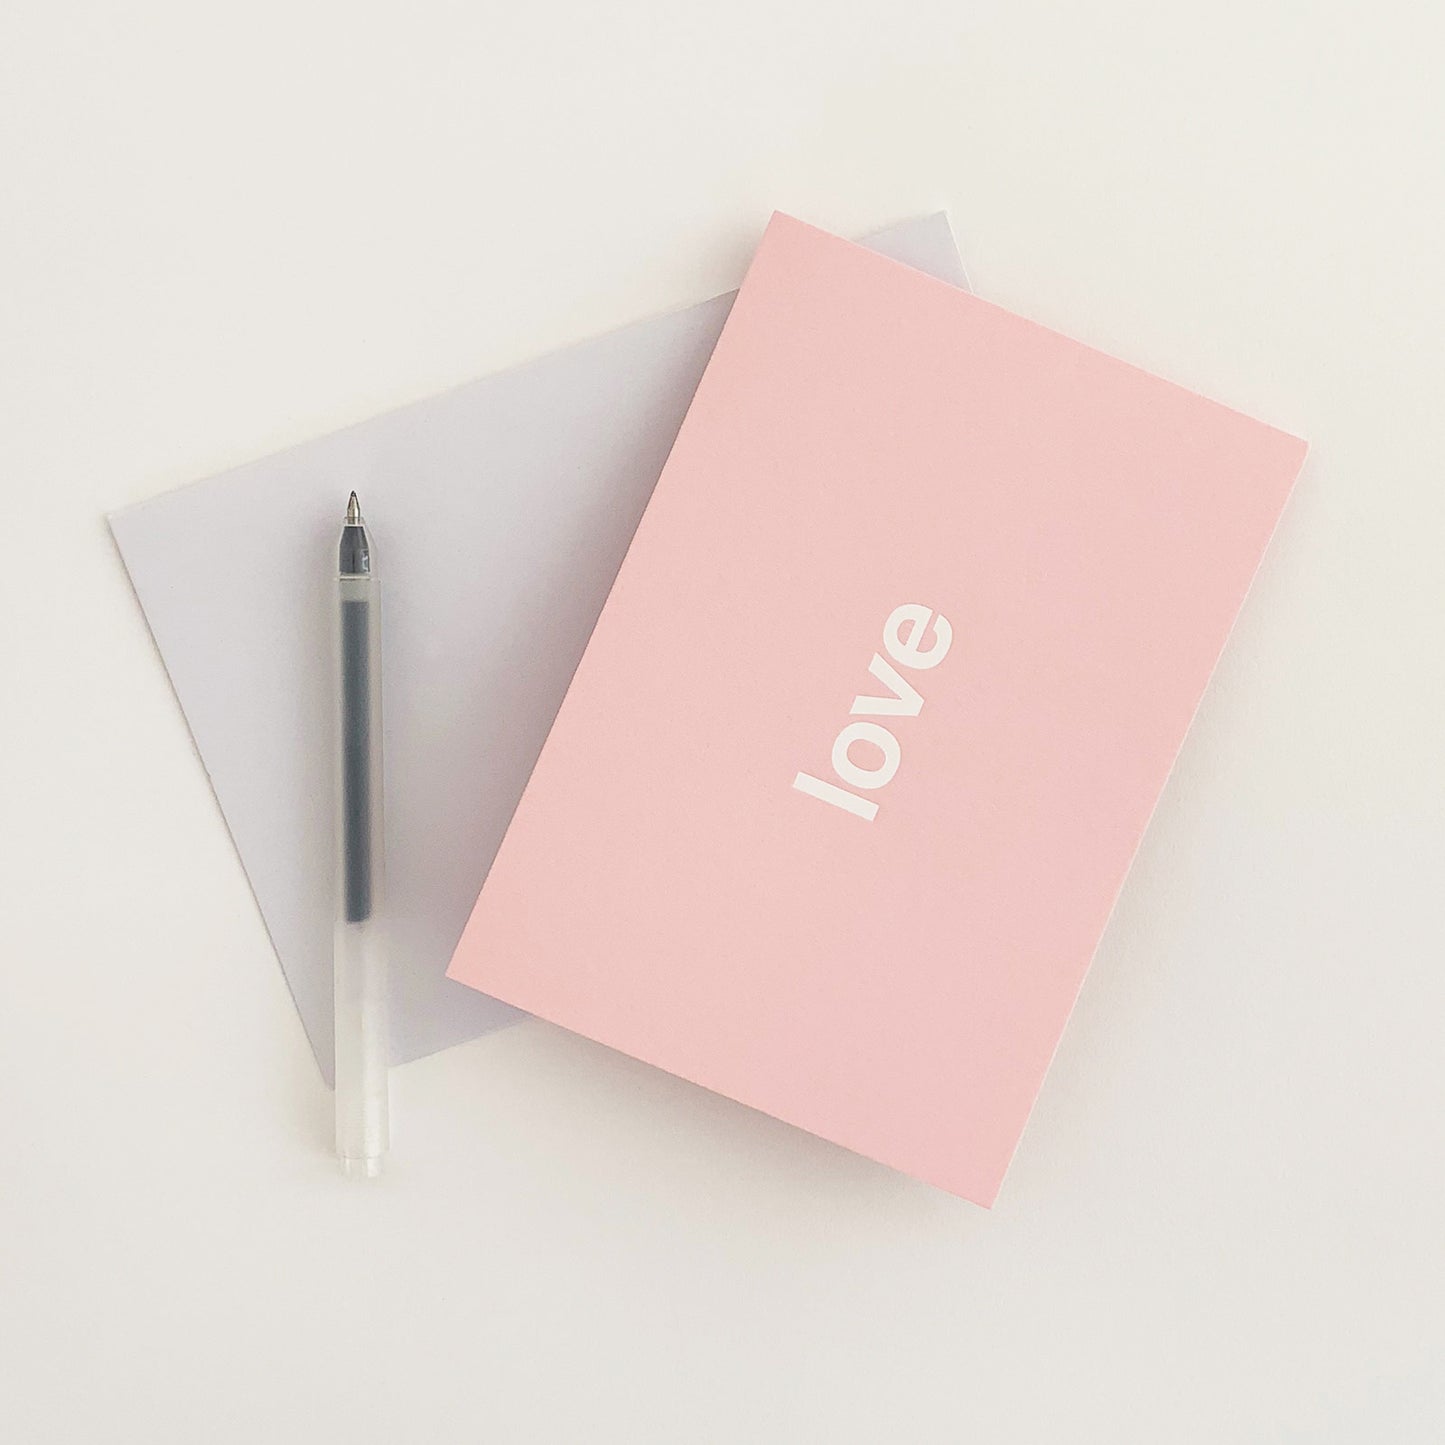 Love Card White & Pink